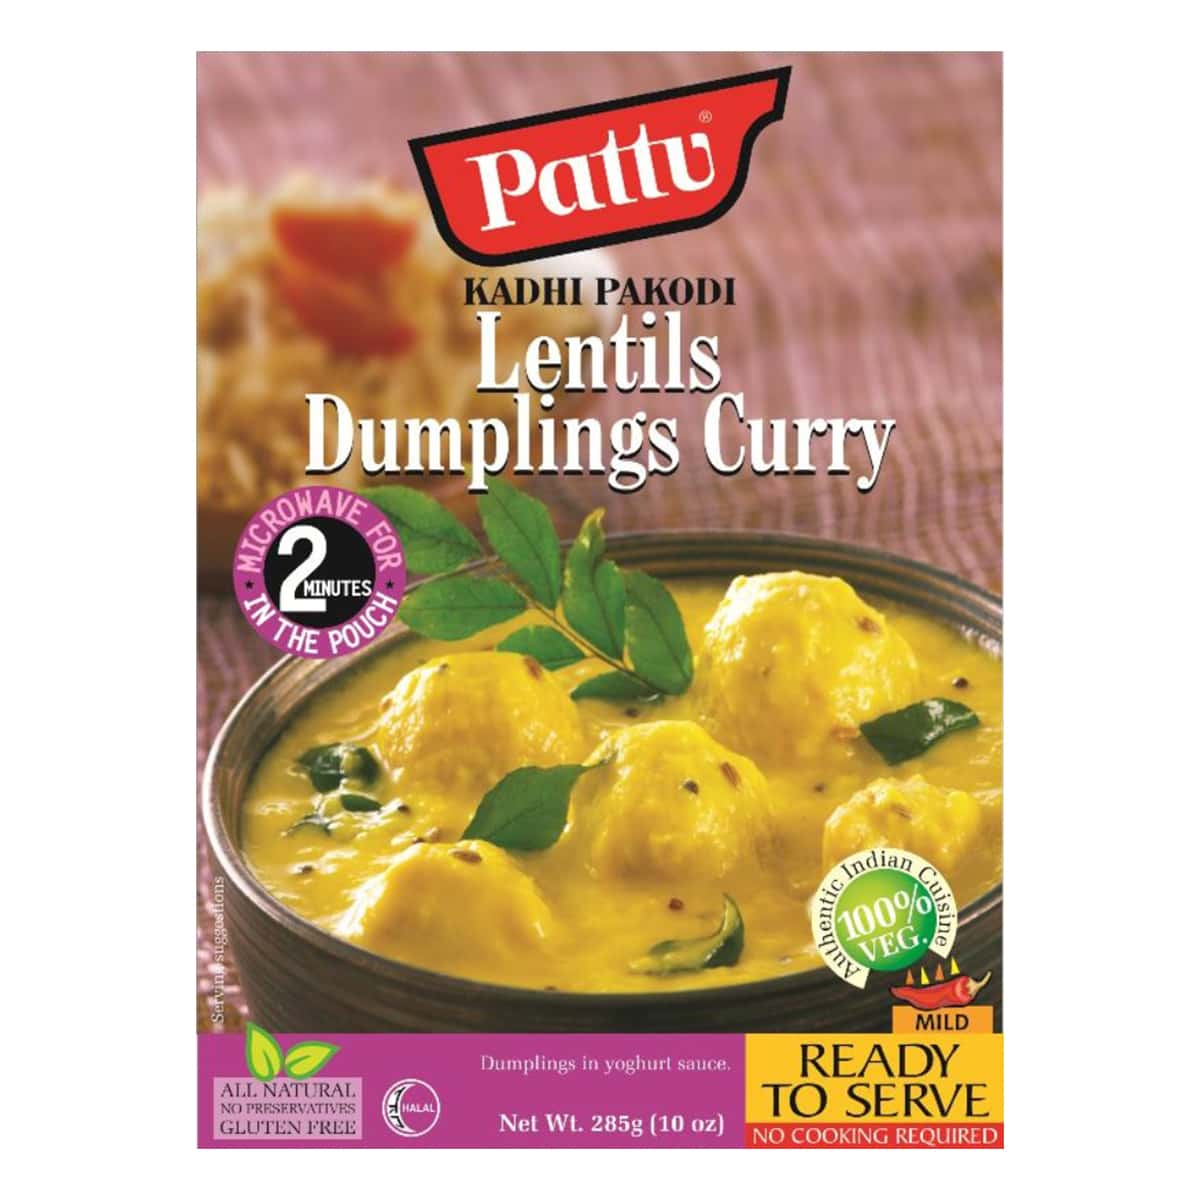 Buy Pattu Kadhi Pakodi (Lentils Dumplings Curry) Ready to Serve - 285 gm